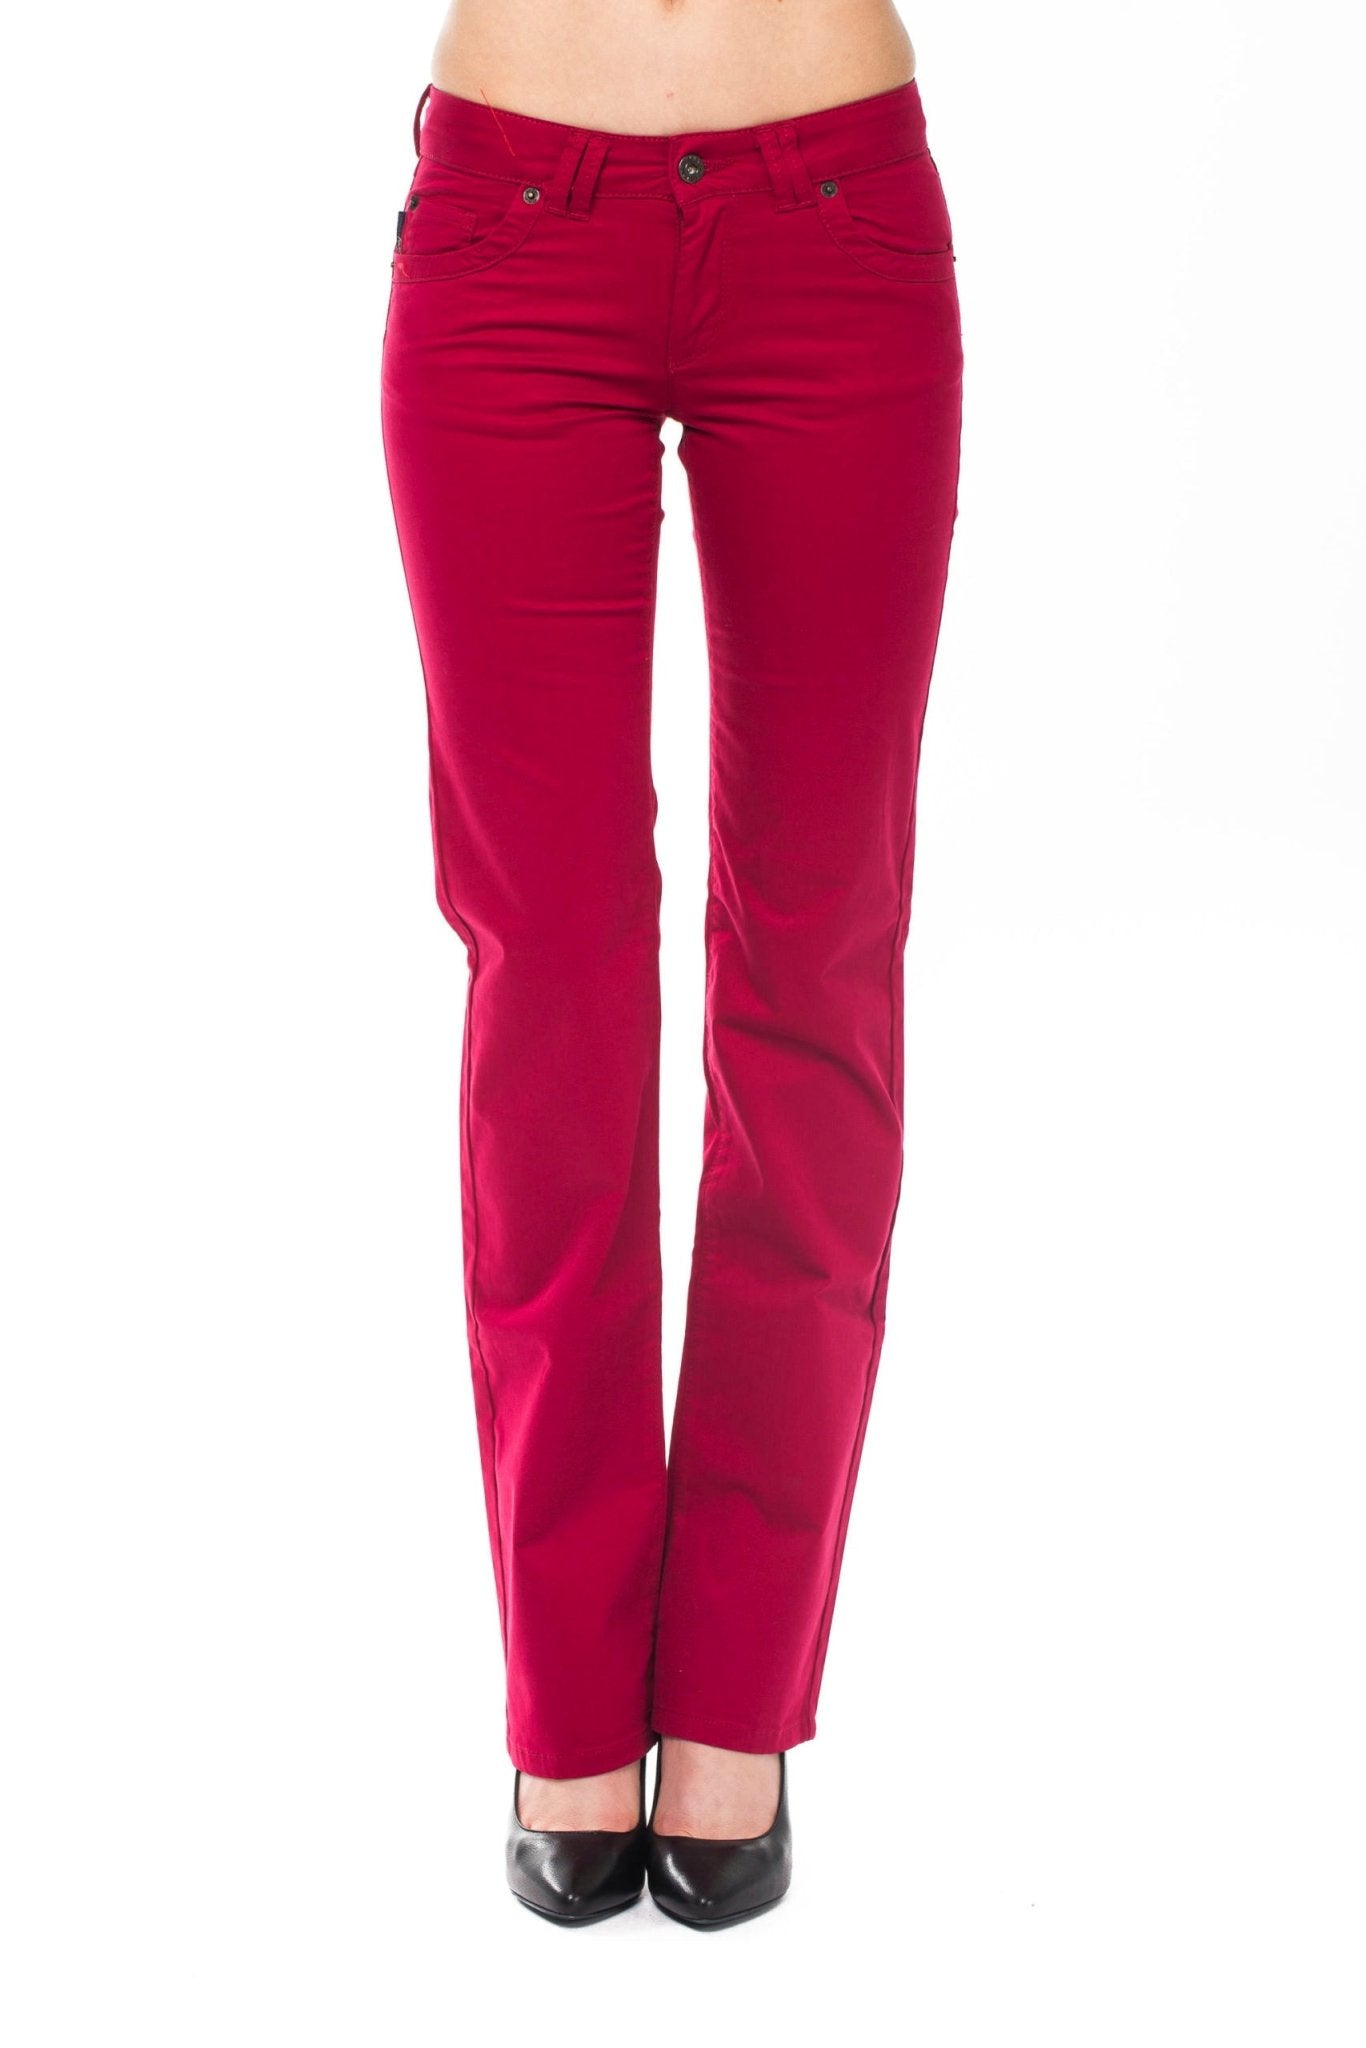 Ungaro Fever Red Cotton Jeans & Pant - Fizigo